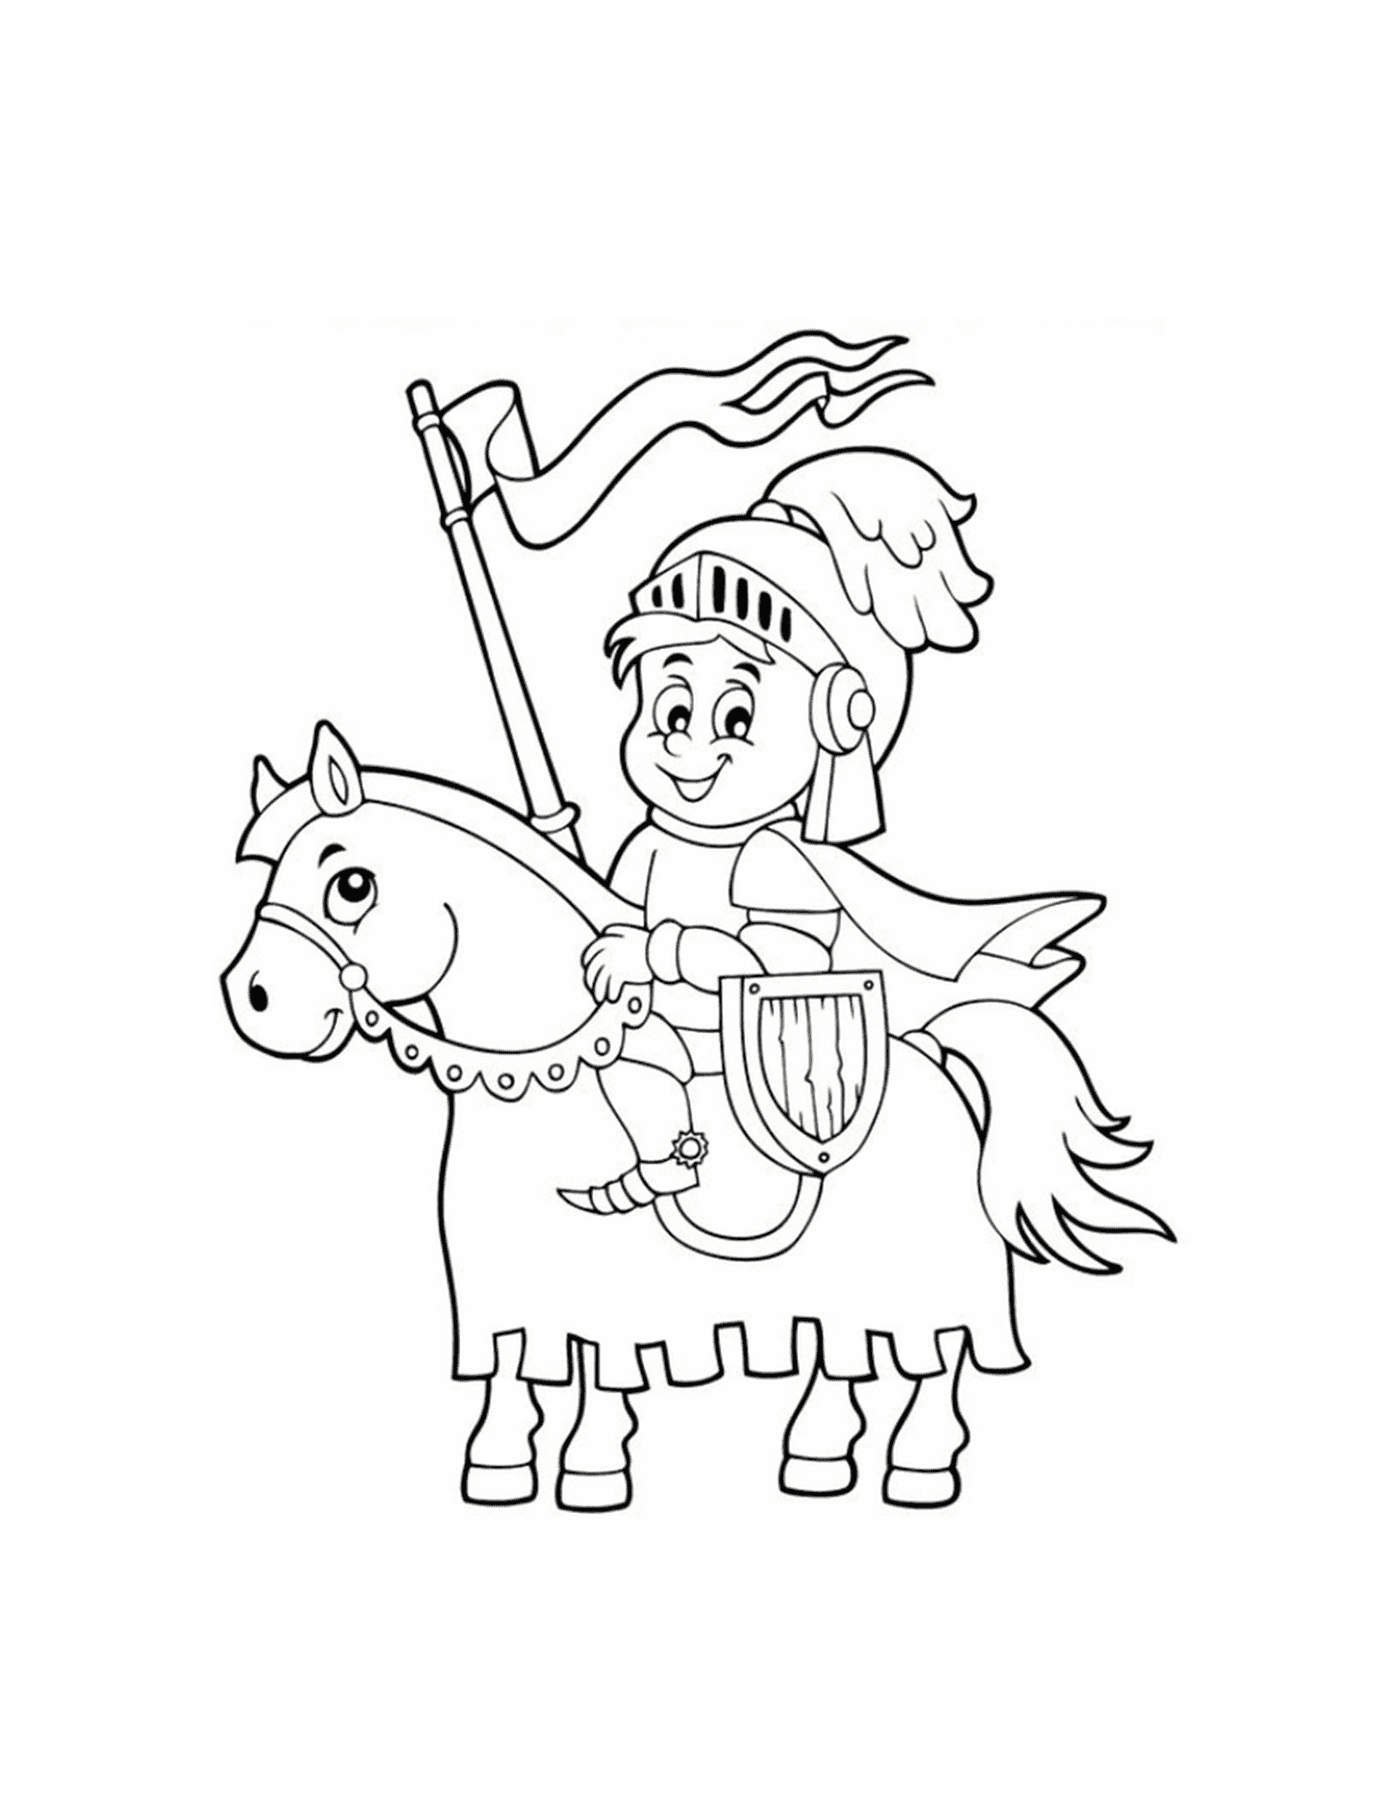  A knight on horseback 